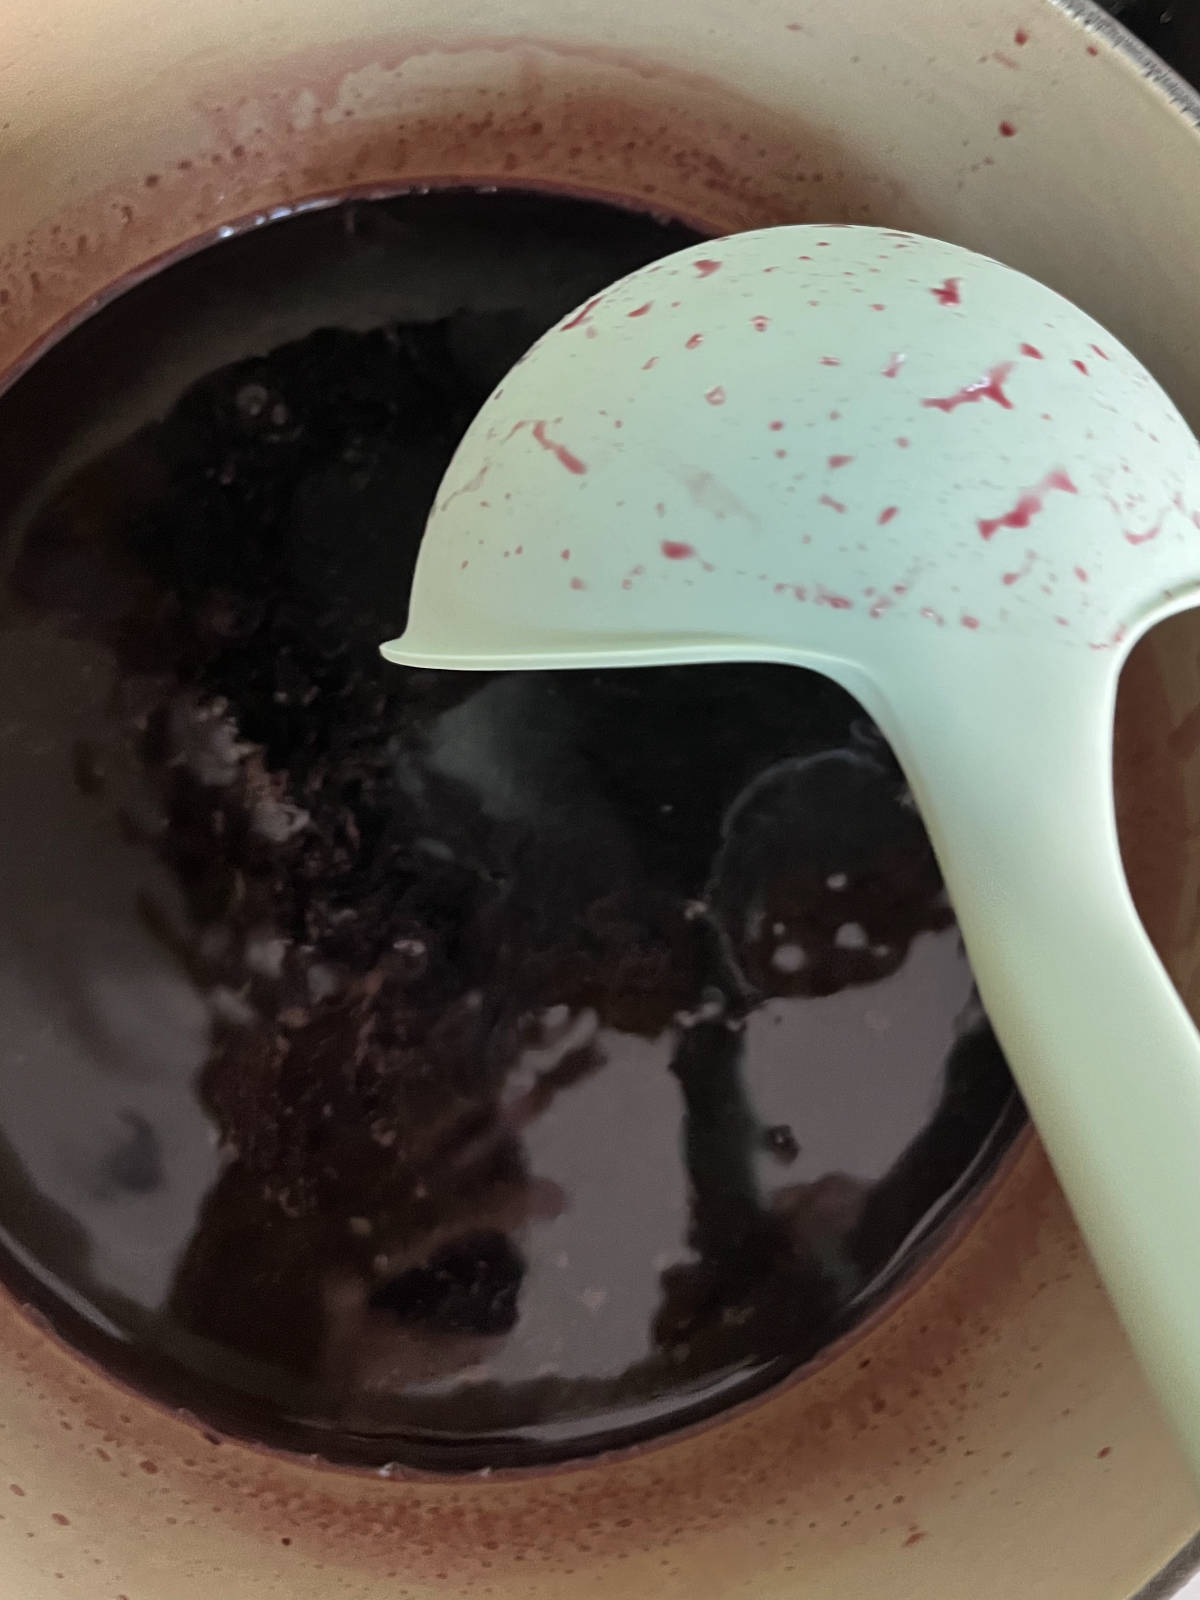 MInt colored ladle stirring burgundy liquid in a ceramic pot.